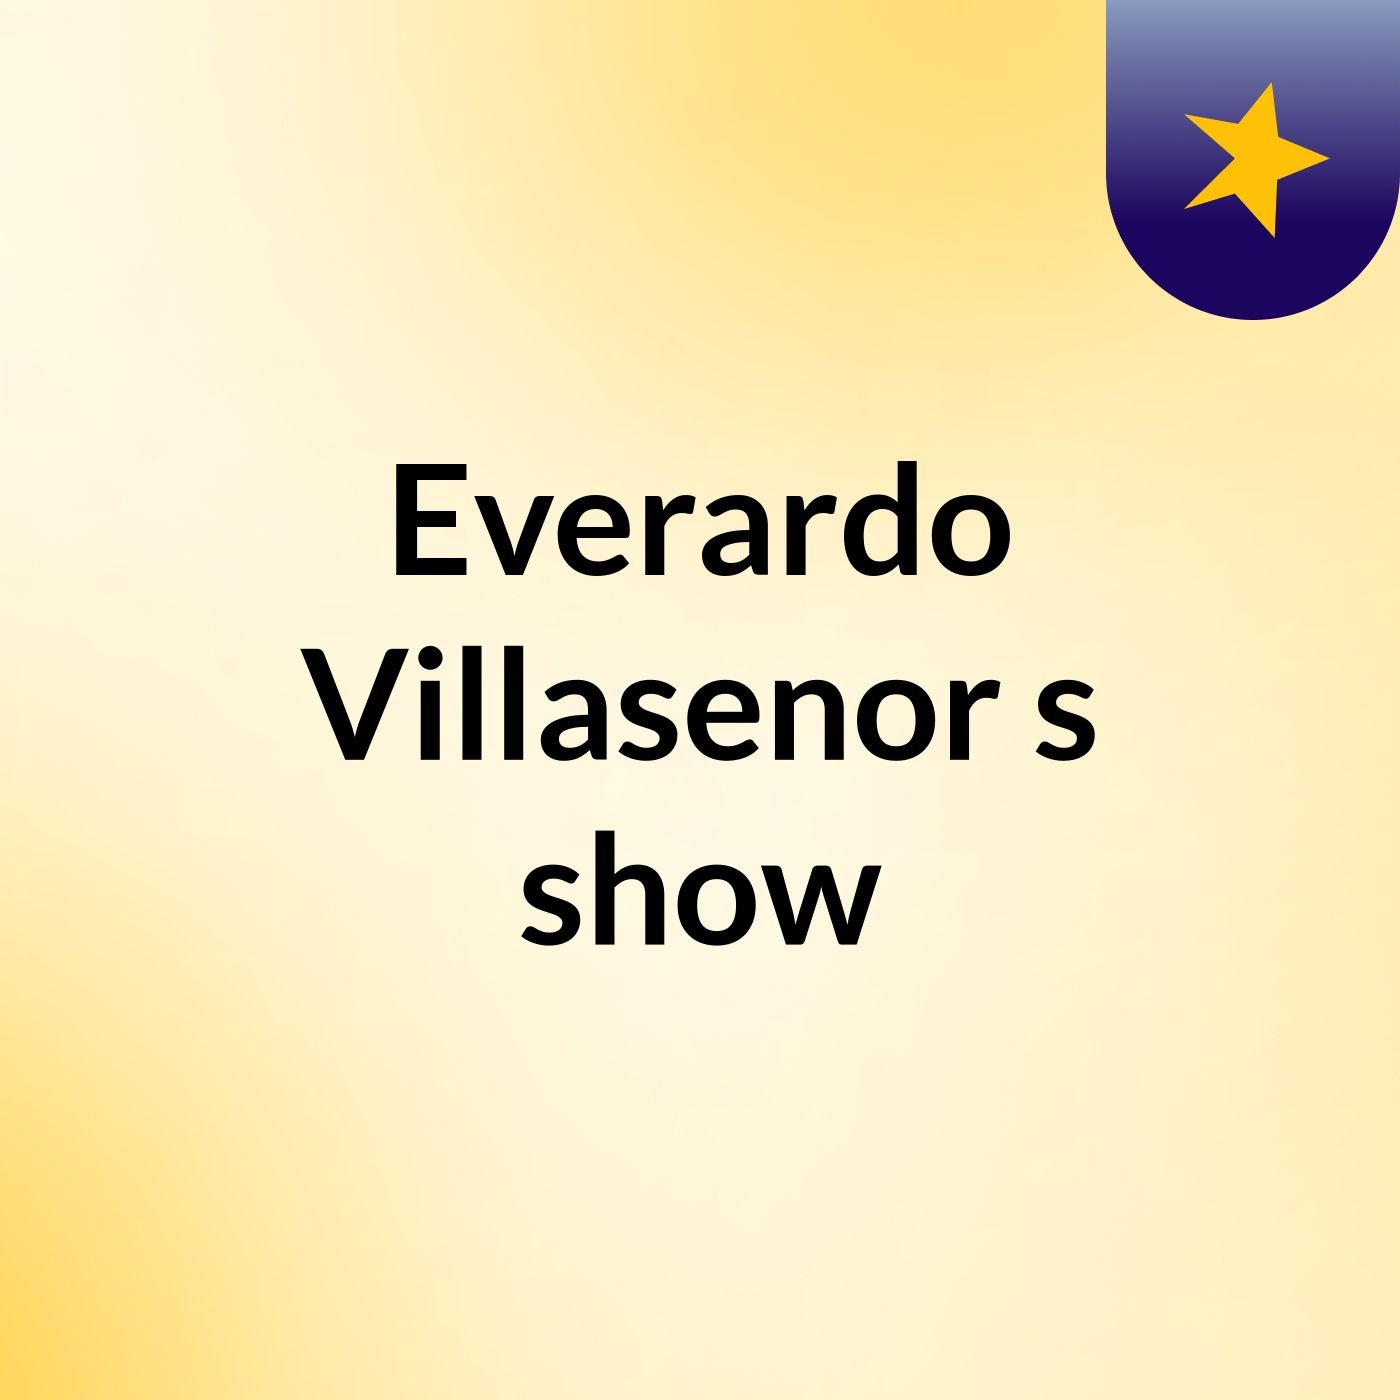 Everardo Villasenor's show